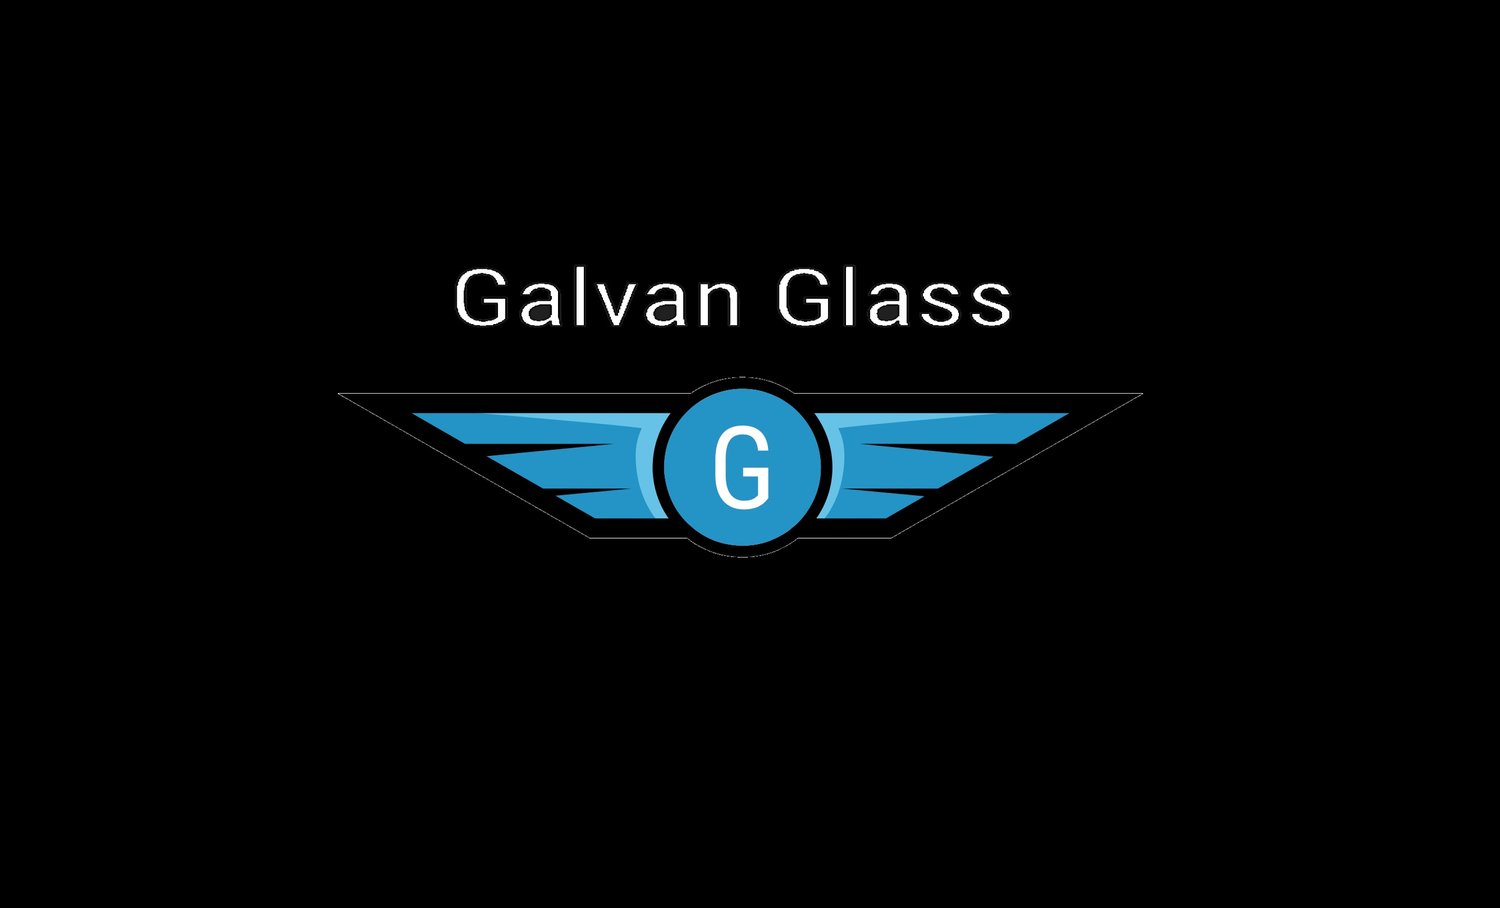 Galvan Glass